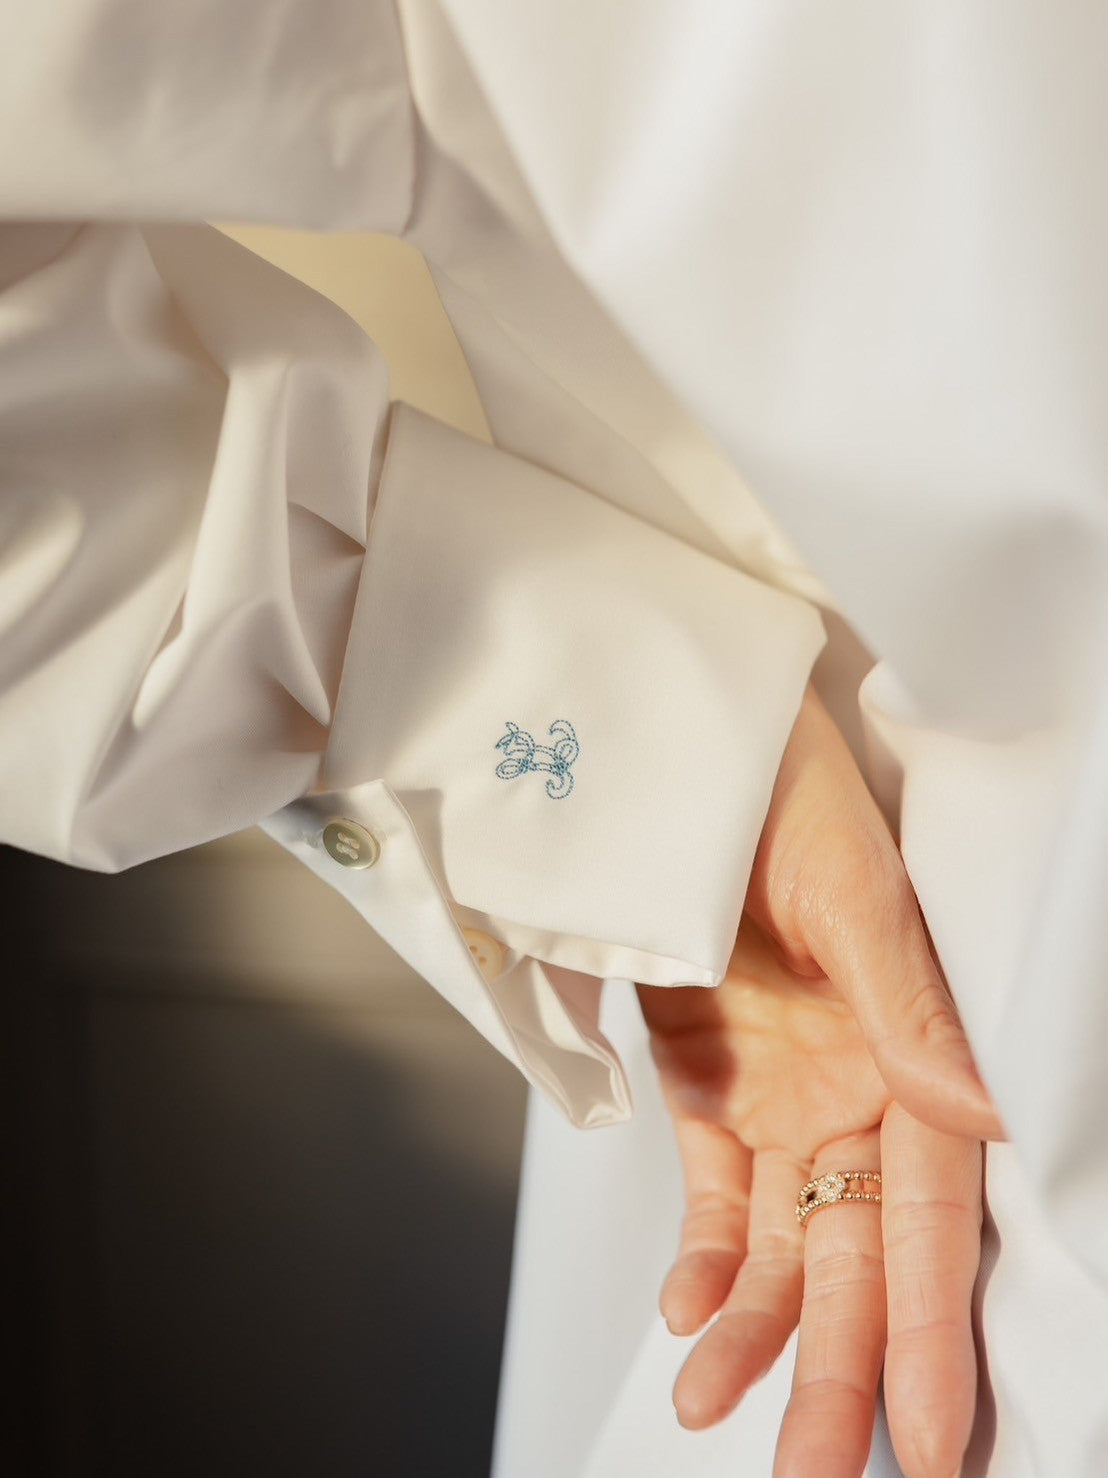 【予約販売】Valentina / blooming embroidery blouse (NAVY×NAVY / WHITE×SMORKY BLUE)